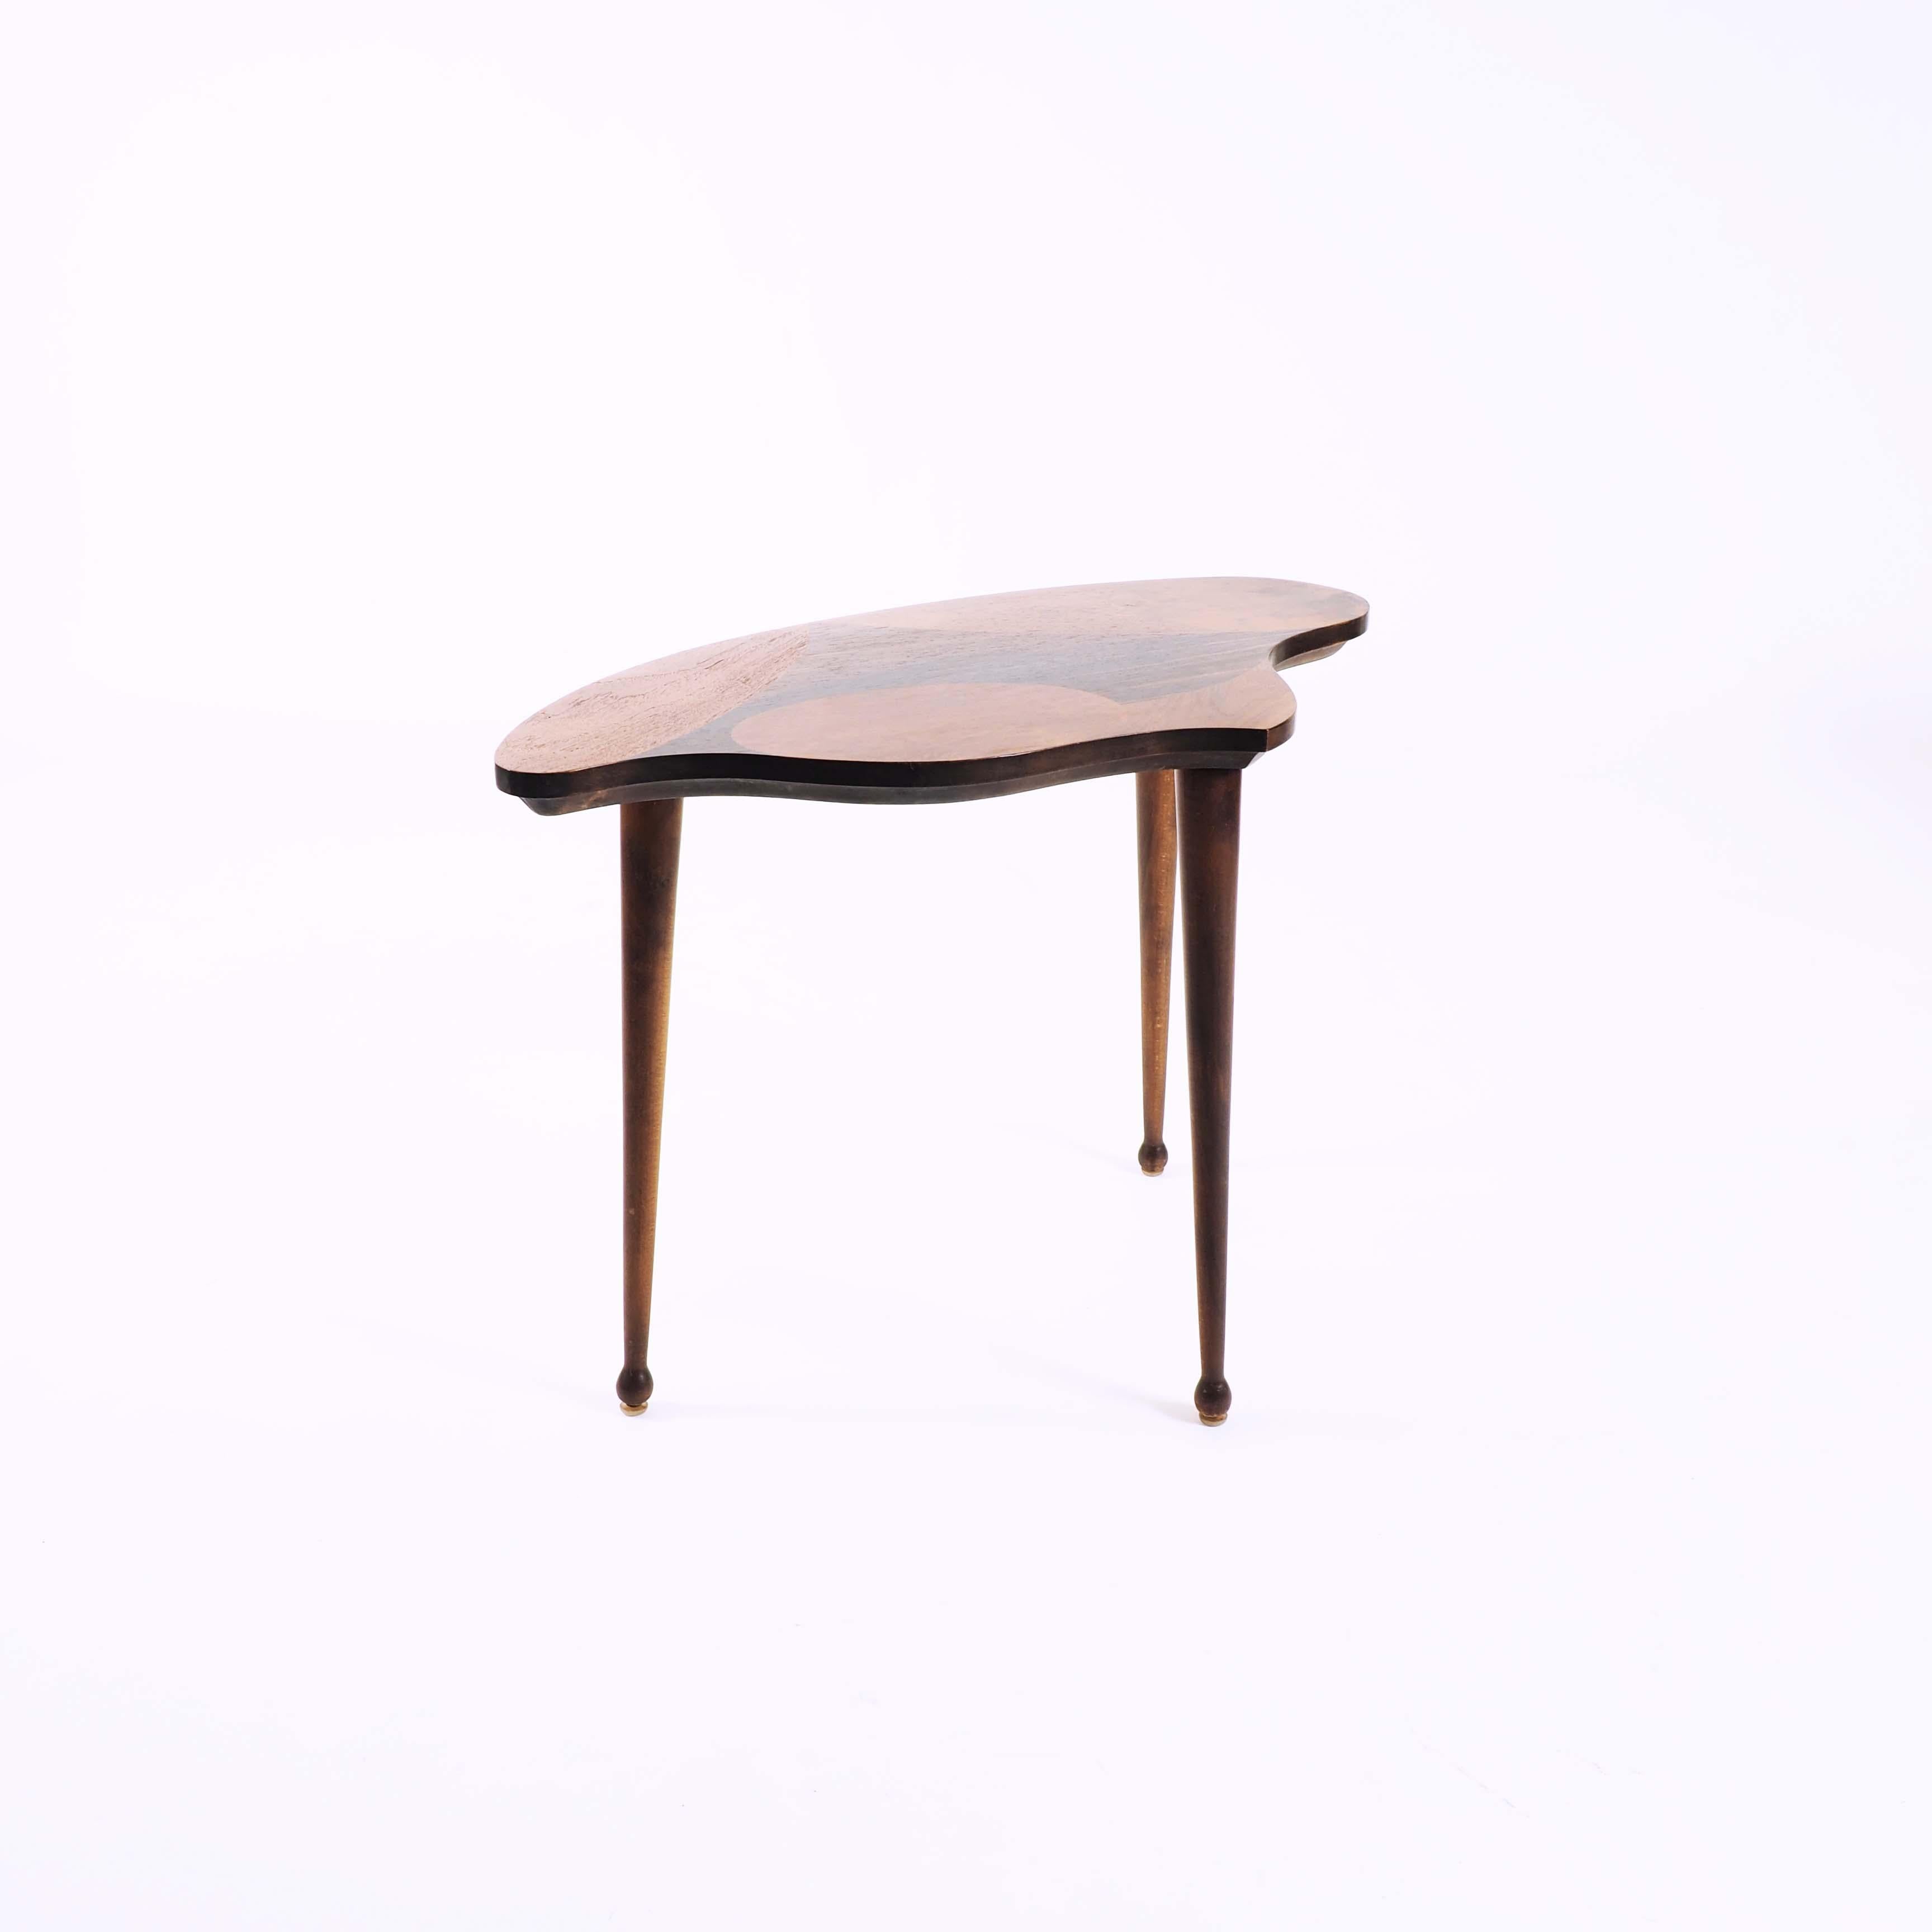 Scandinavian Modern Organic Shaped Swedish Side Table with Inlaid Wood For Sale